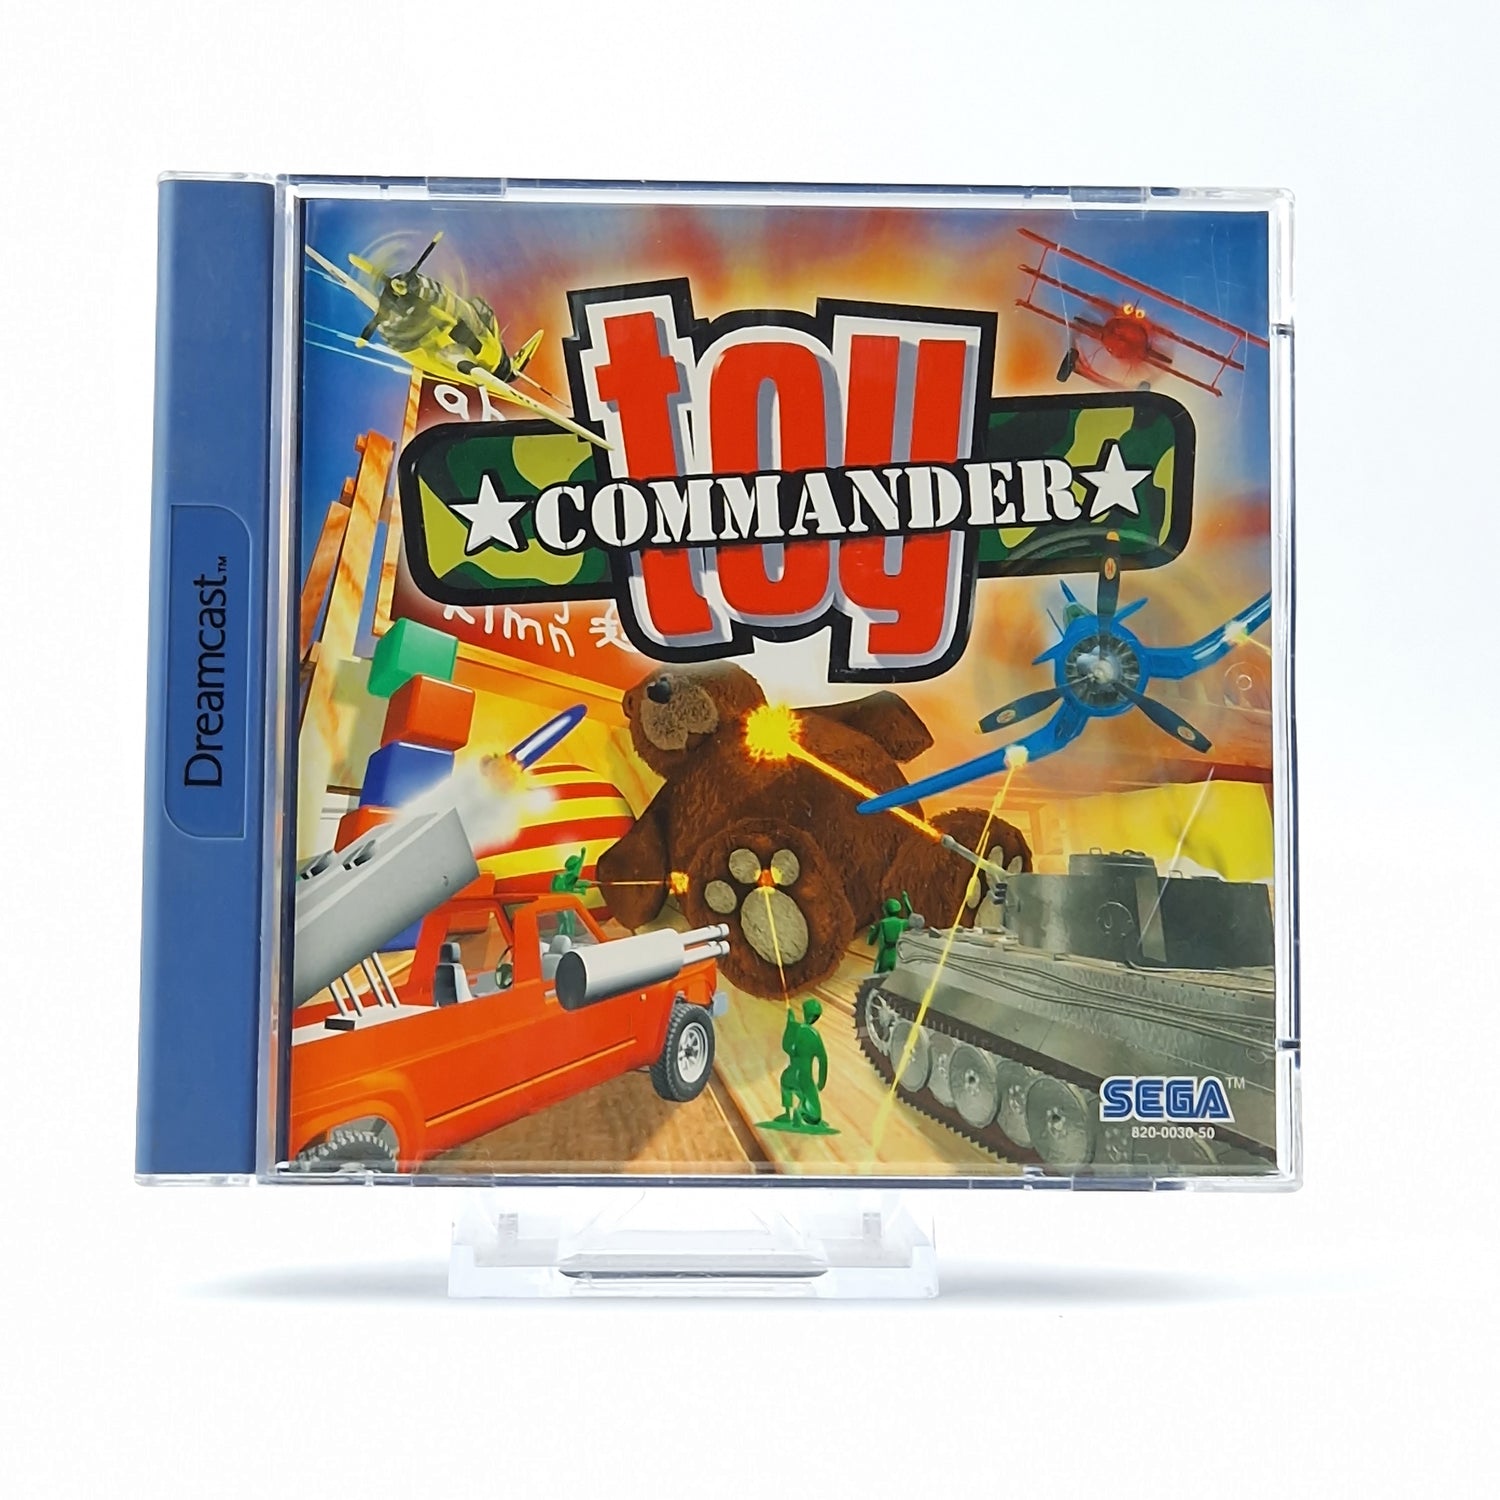 Sega Dreamcast game: Toy Commander - CD instructions OVP cib / DC PAL game